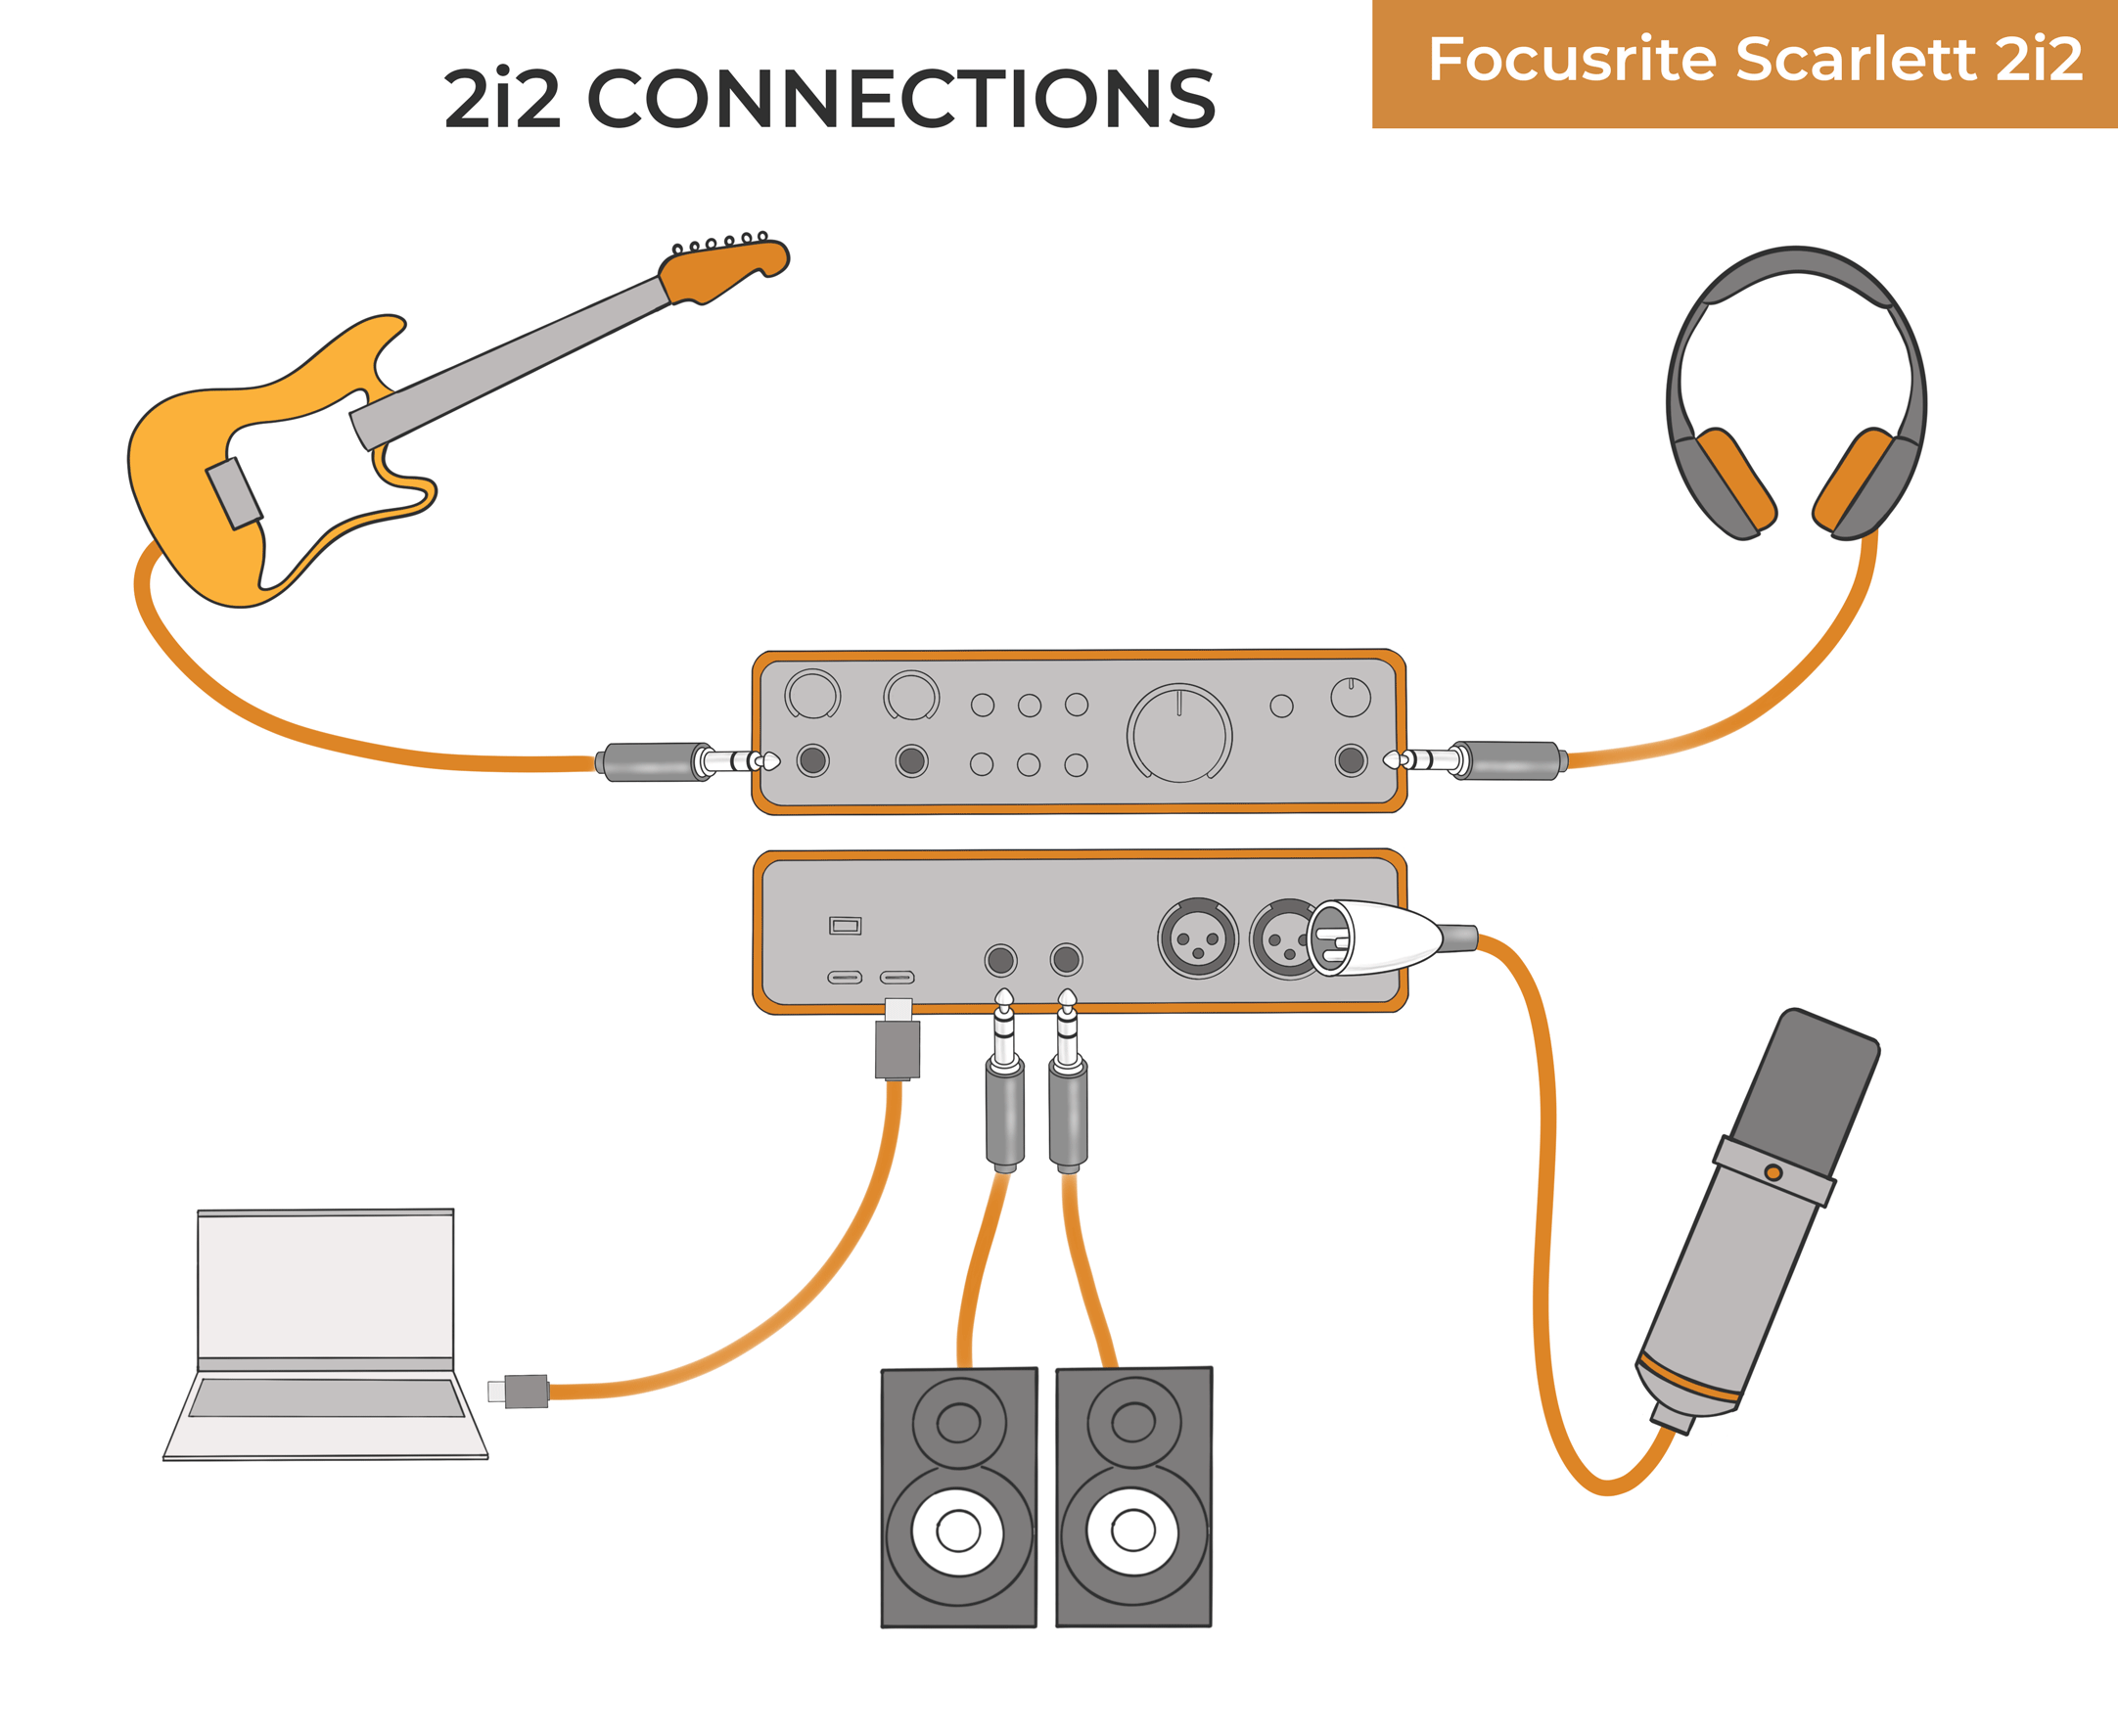 Connecting a Focusrite Scarlett 2i2 audio interface